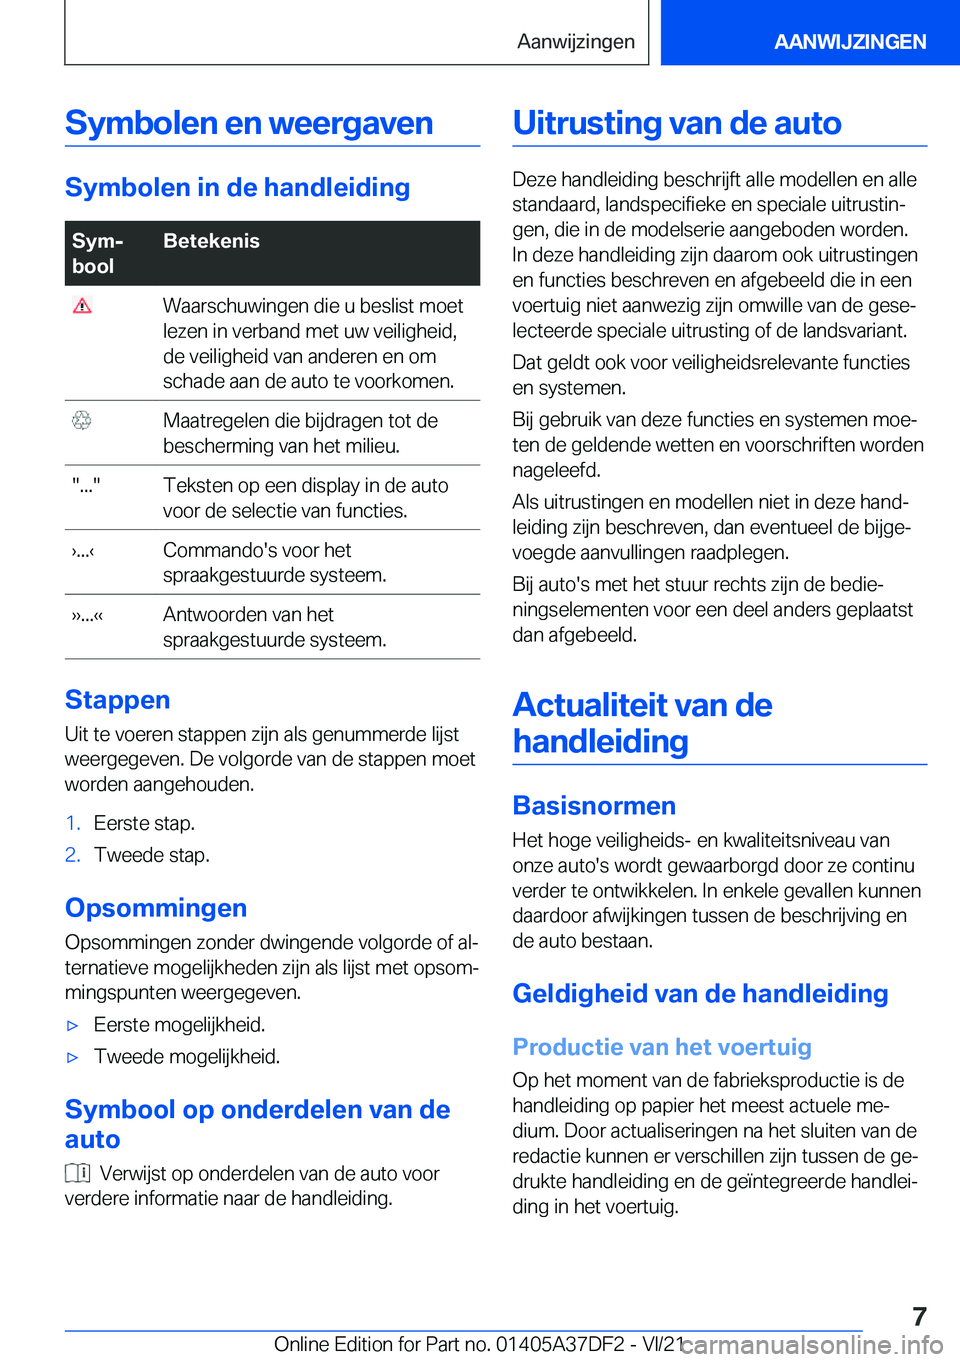 BMW M8 GRAN COUPE 2022  Instructieboekjes (in Dutch) �S�y�m�b�o�l�e�n��e�n��w�e�e�r�g�a�v�e�n
�S�y�m�b�o�l�e�n��i�n��d�e��h�a�n�d�l�e�i�d�i�n�g
�S�y�mj
�b�o�o�l�B�e�t�e�k�e�n�i�s��W�a�a�r�s�c�h�u�w�i�n�g�e�n��d�i�e��u��b�e�s�l�i�s�t��m�o�e�t
